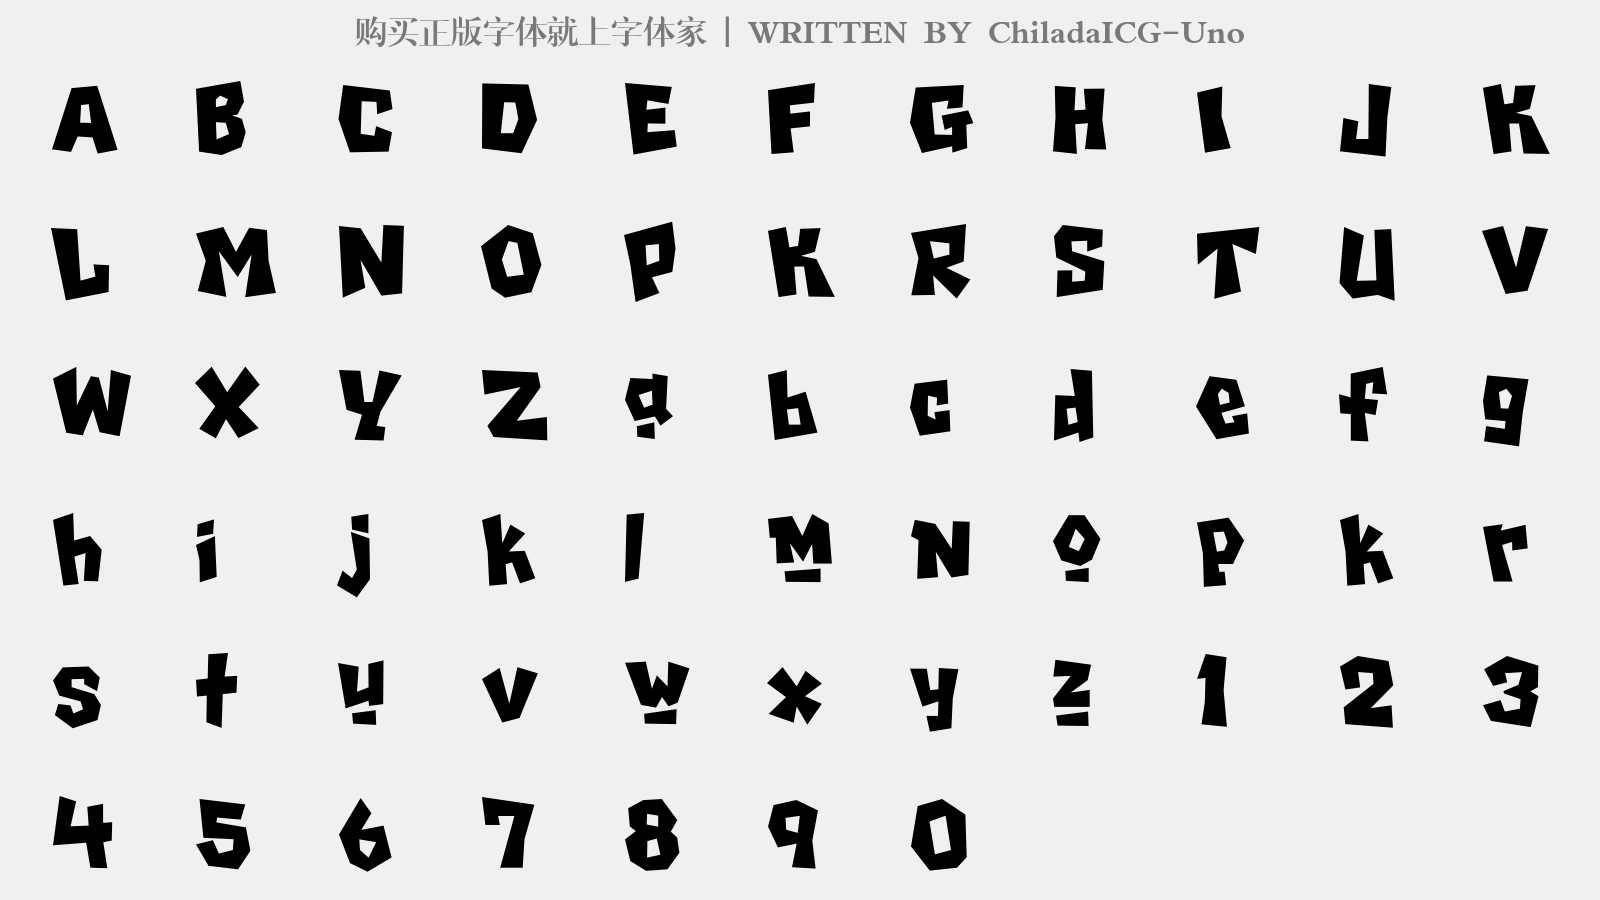 ChiladaICG-Uno - 大写字母/小写字母/数字